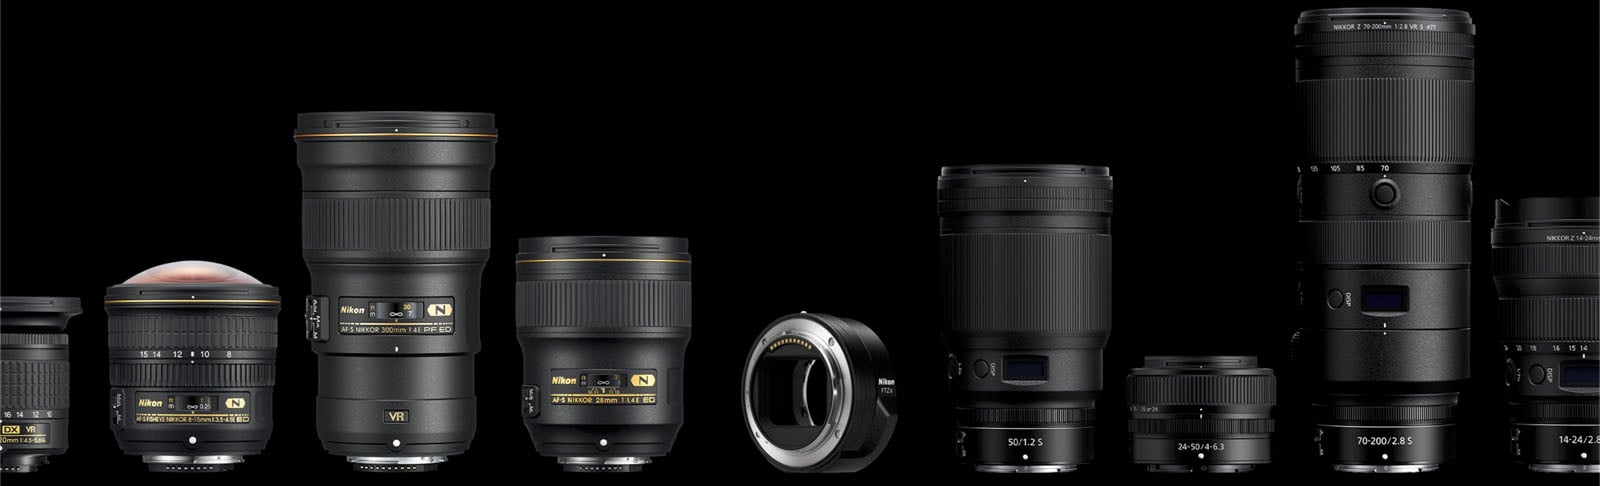 Nikon ditching lens roadmaps